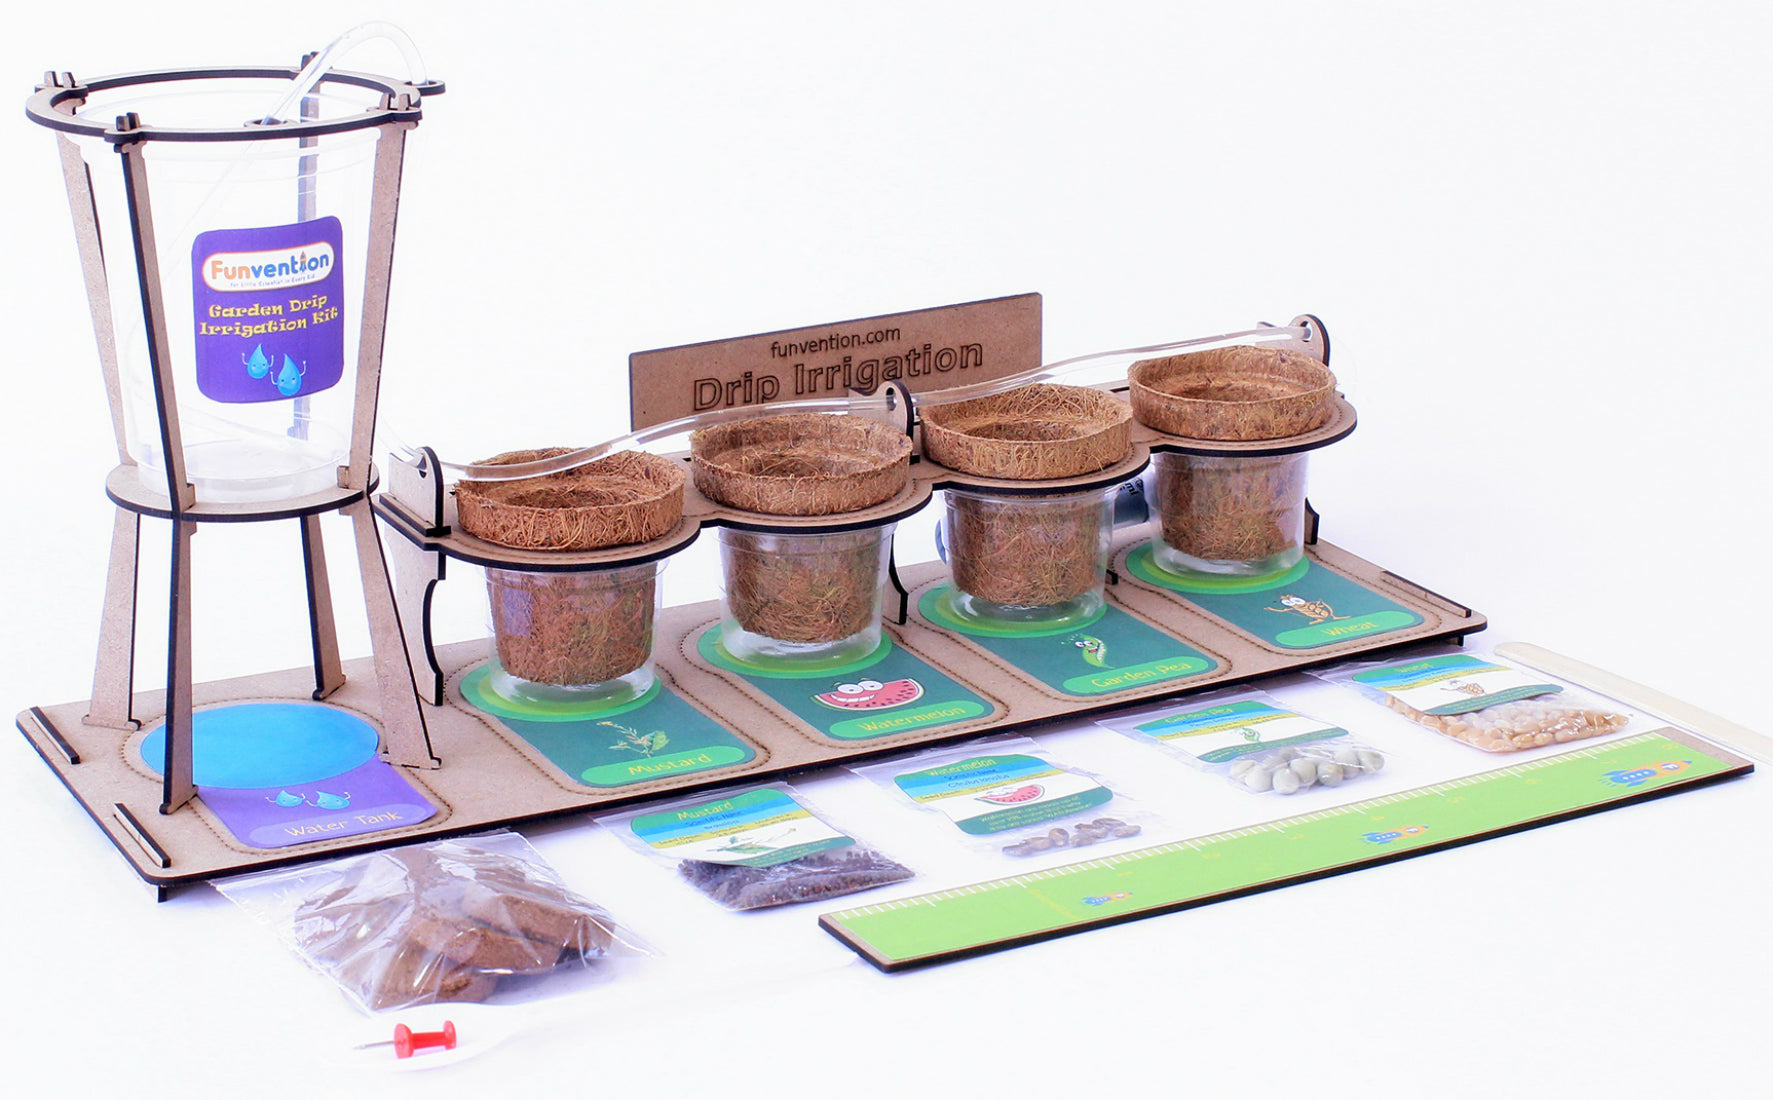 Garden Drip Irrigation Kit | Book Bargain Buy